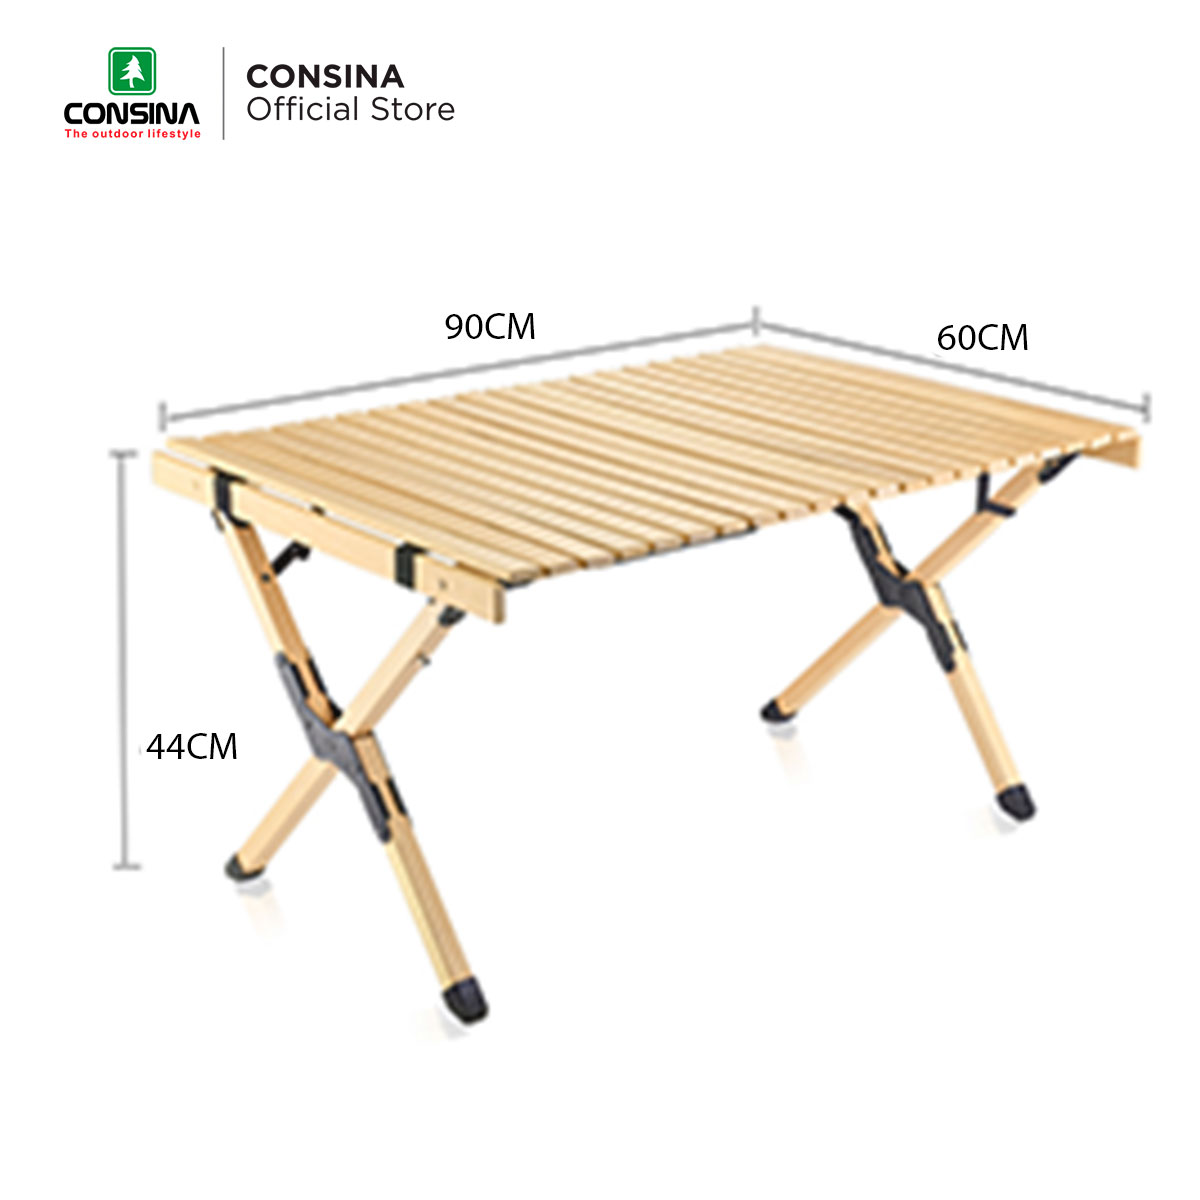 consina table pine wood camping meja lipat kayu - toko online